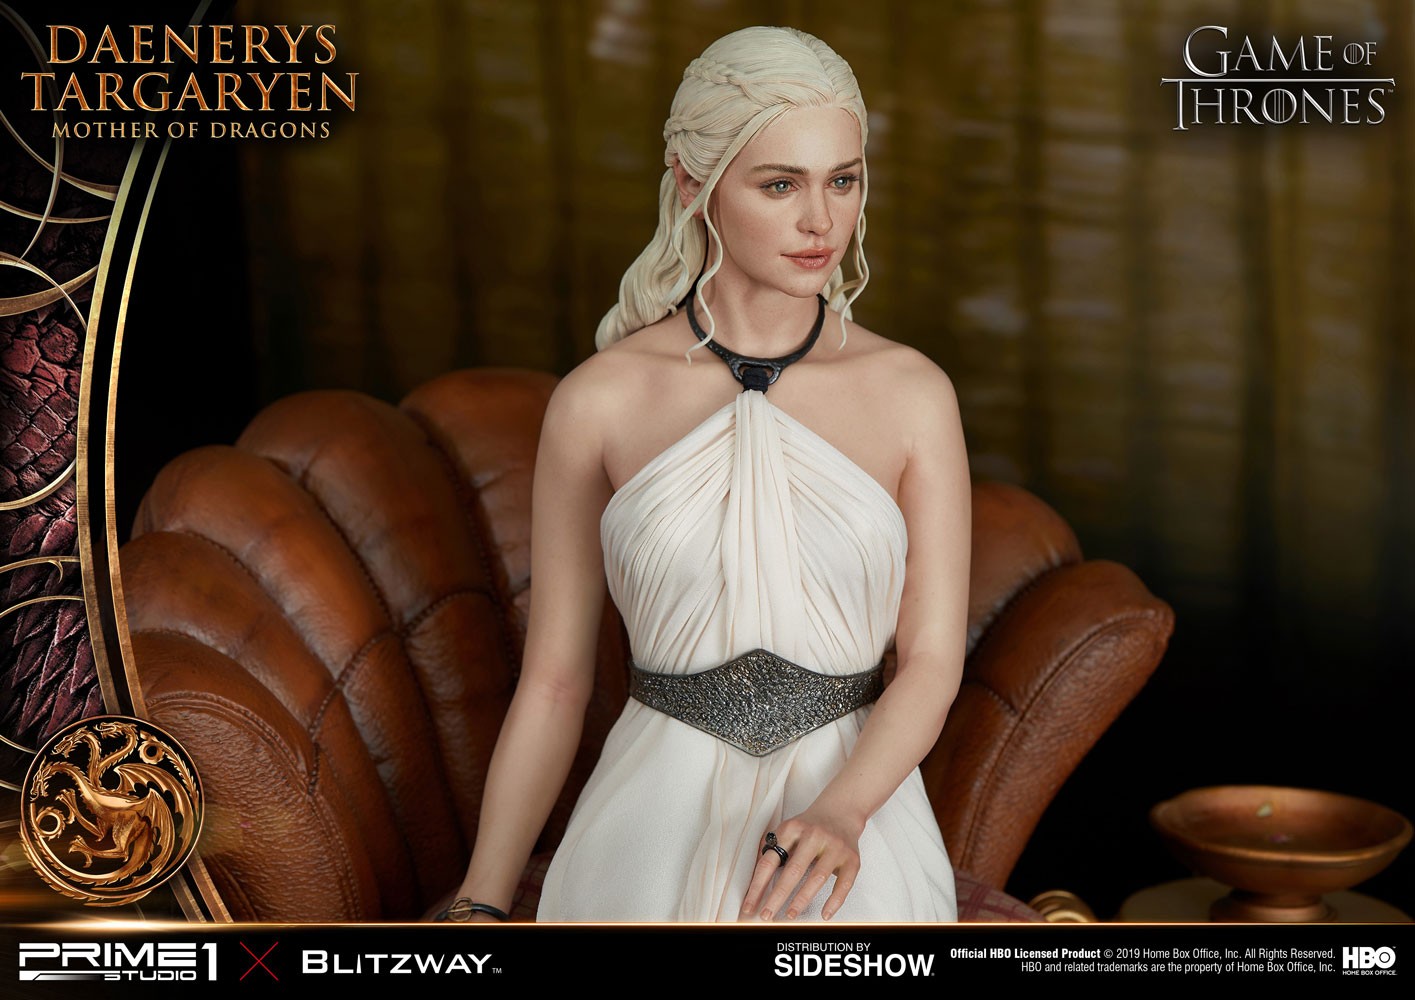 Daenerys Targaryen, Mother of Dragons (Prototype Shown) View 45